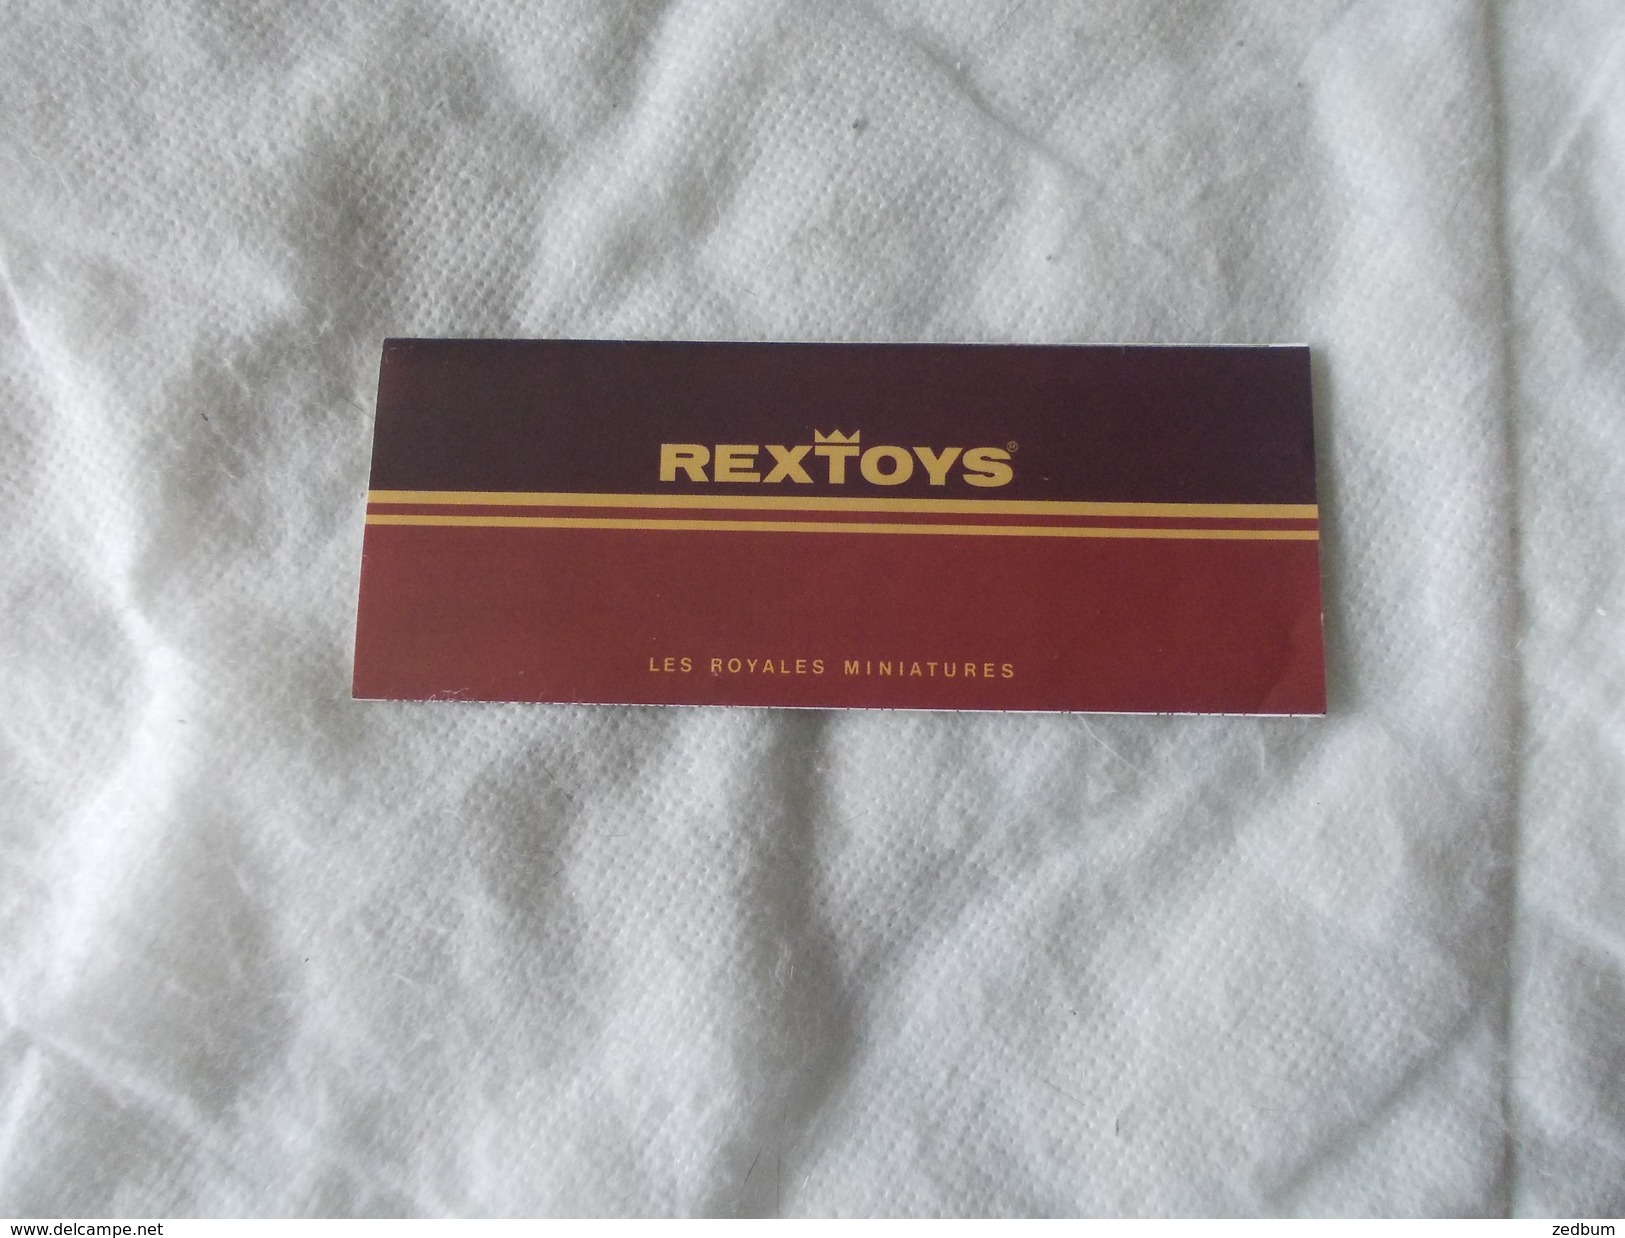 Rextoys Les Royales Miniatures - Model Making